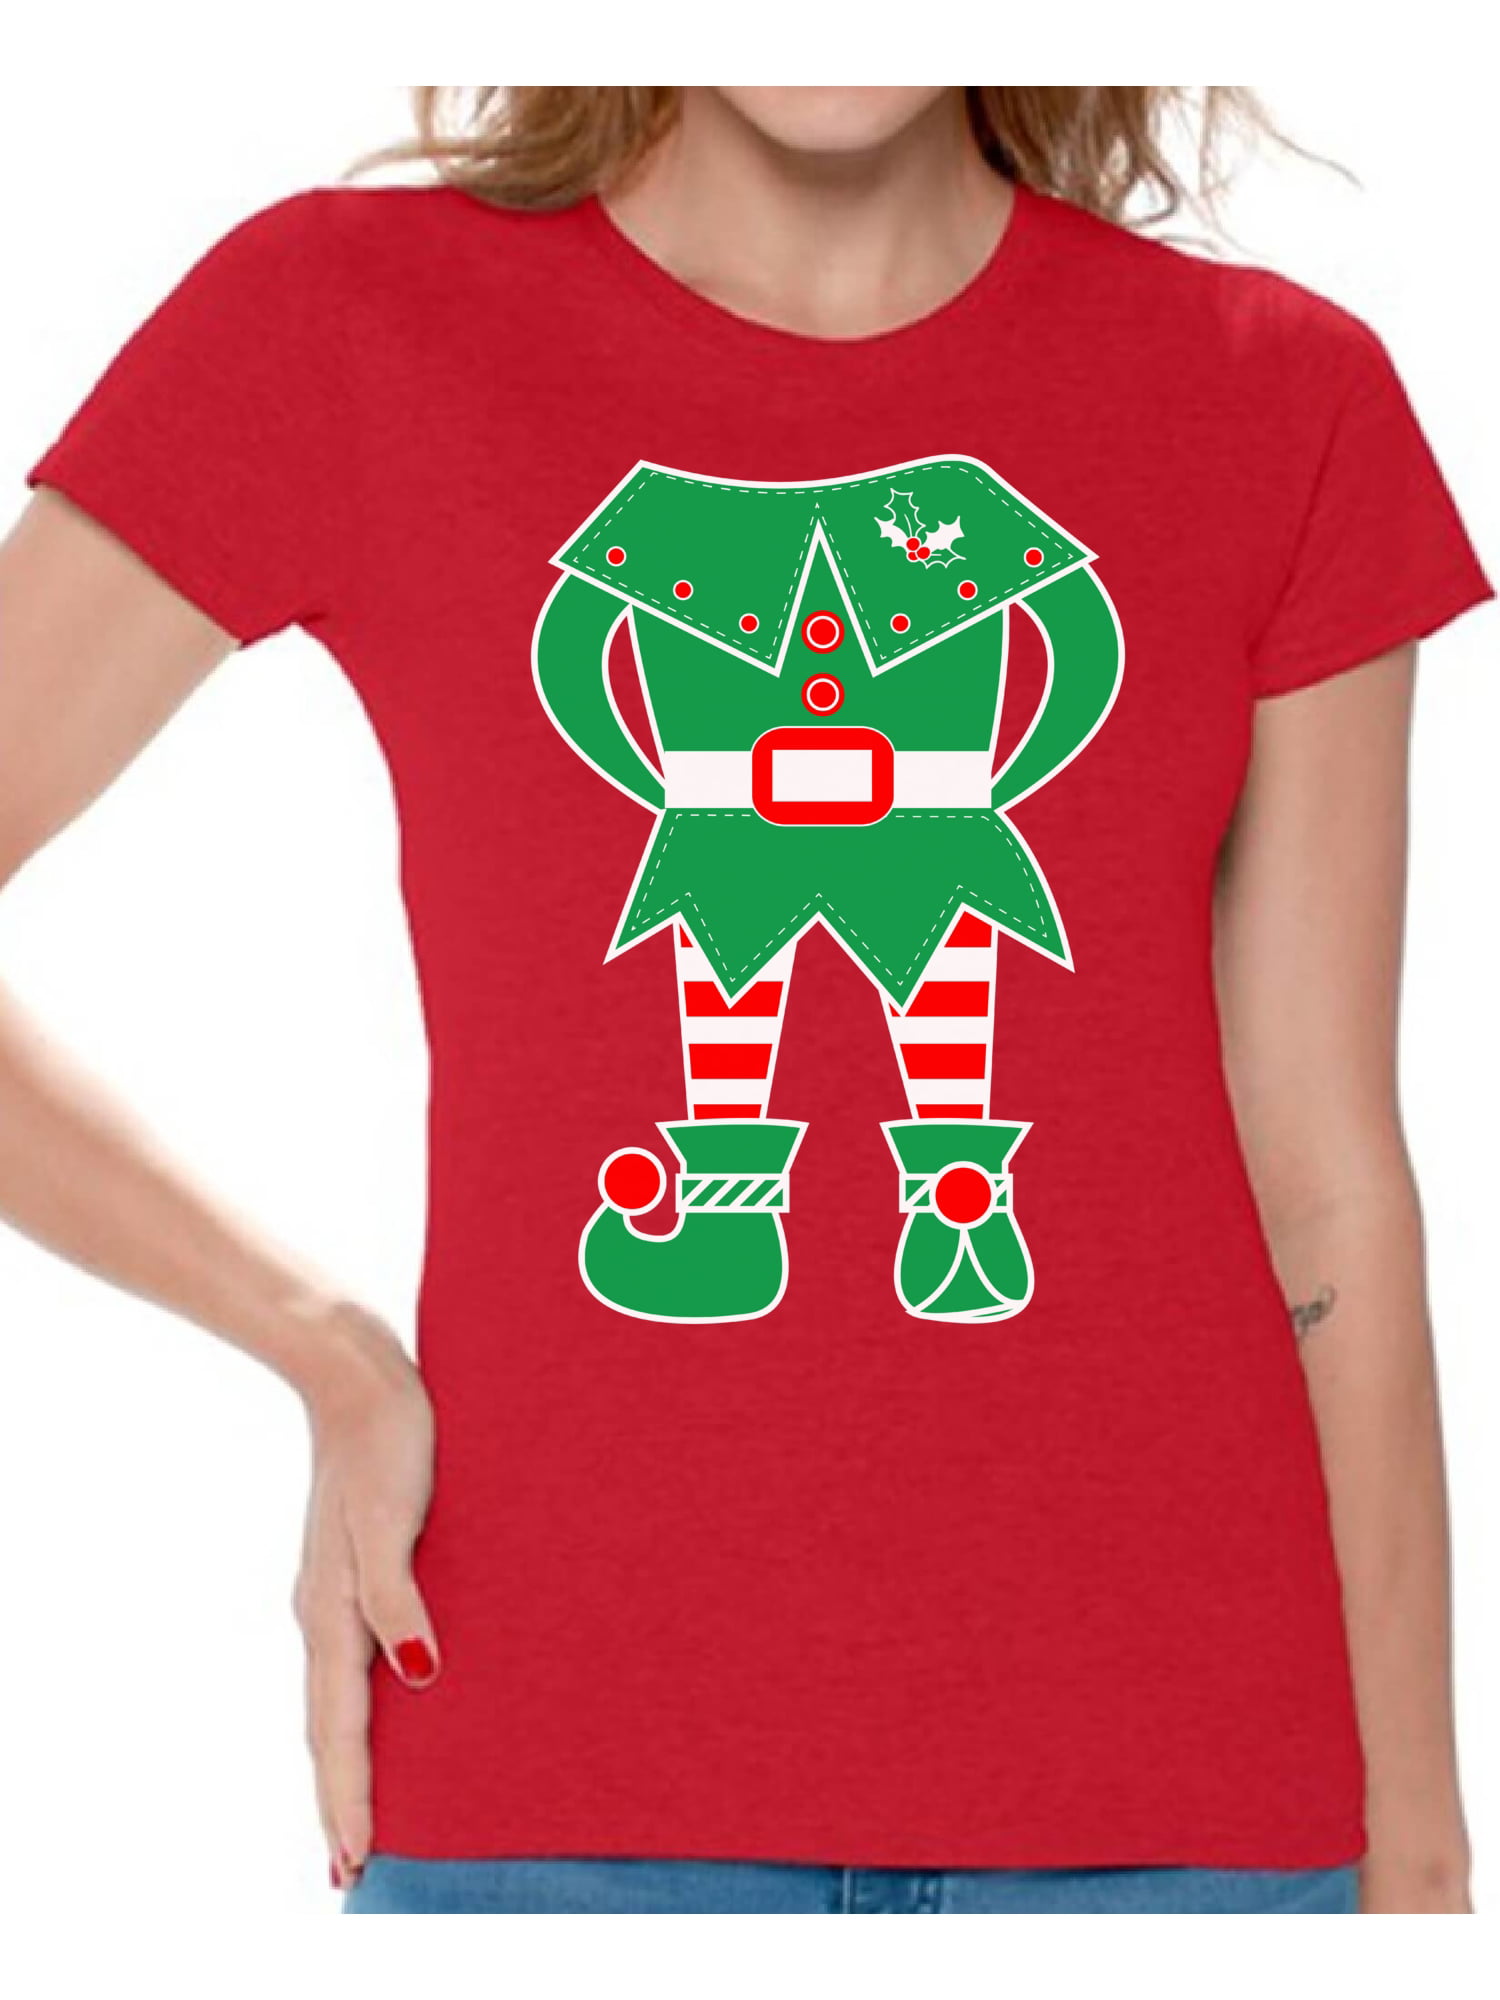 Elf shirts Staff shirts. Sassy elf Funny shirts Naughty elf Loud elf Christmas shirts Group shirts